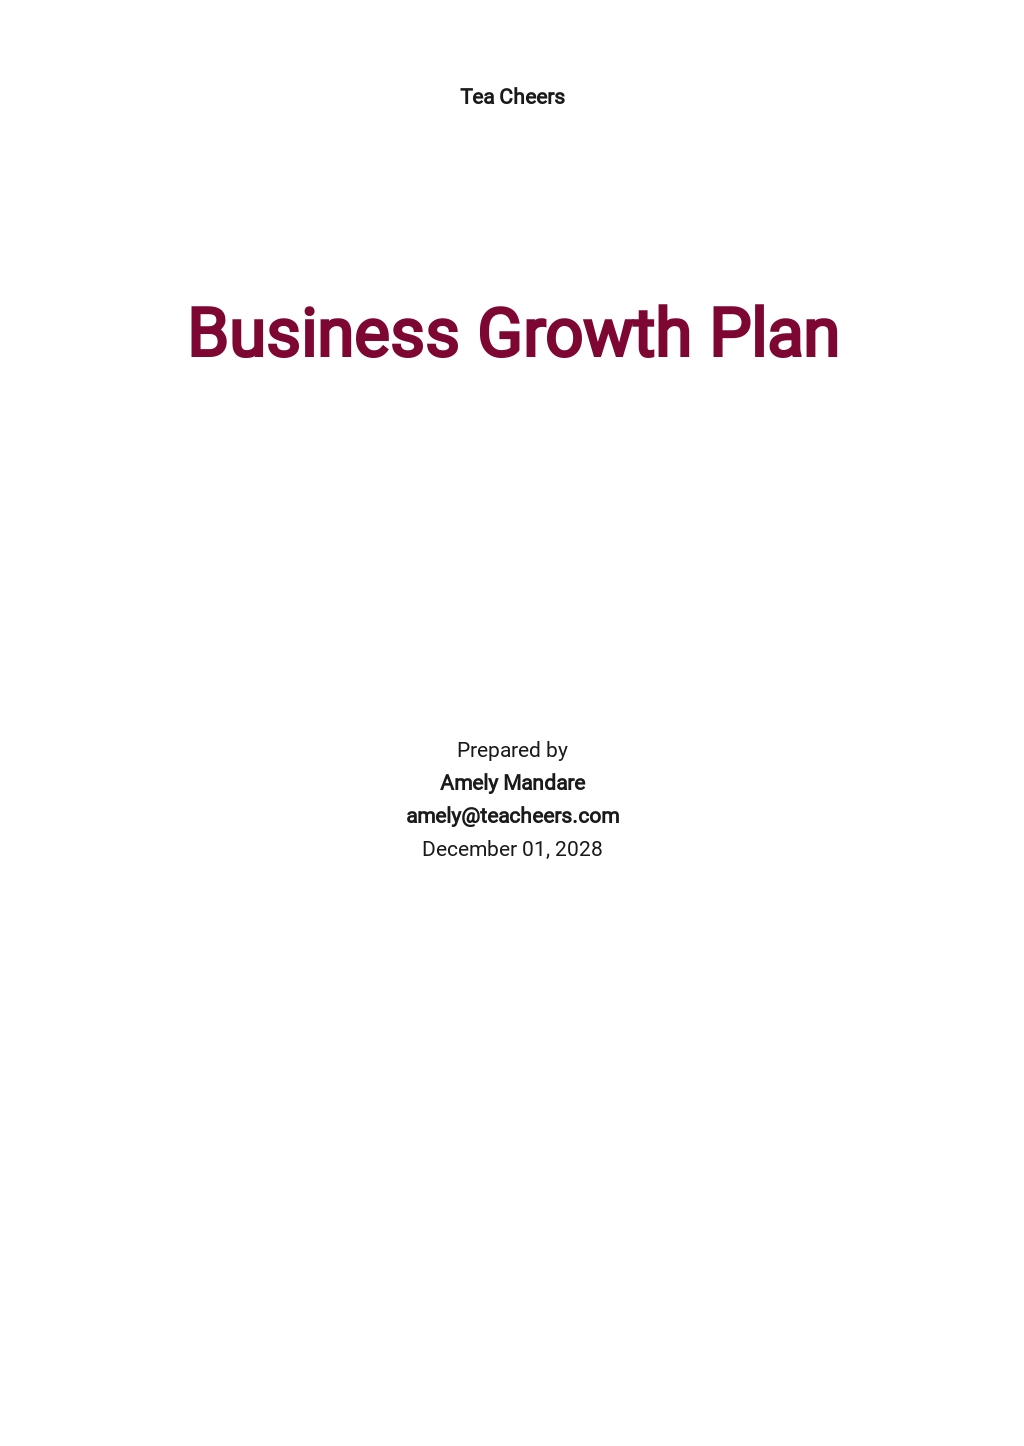 Business Growth Plan Template.jpe